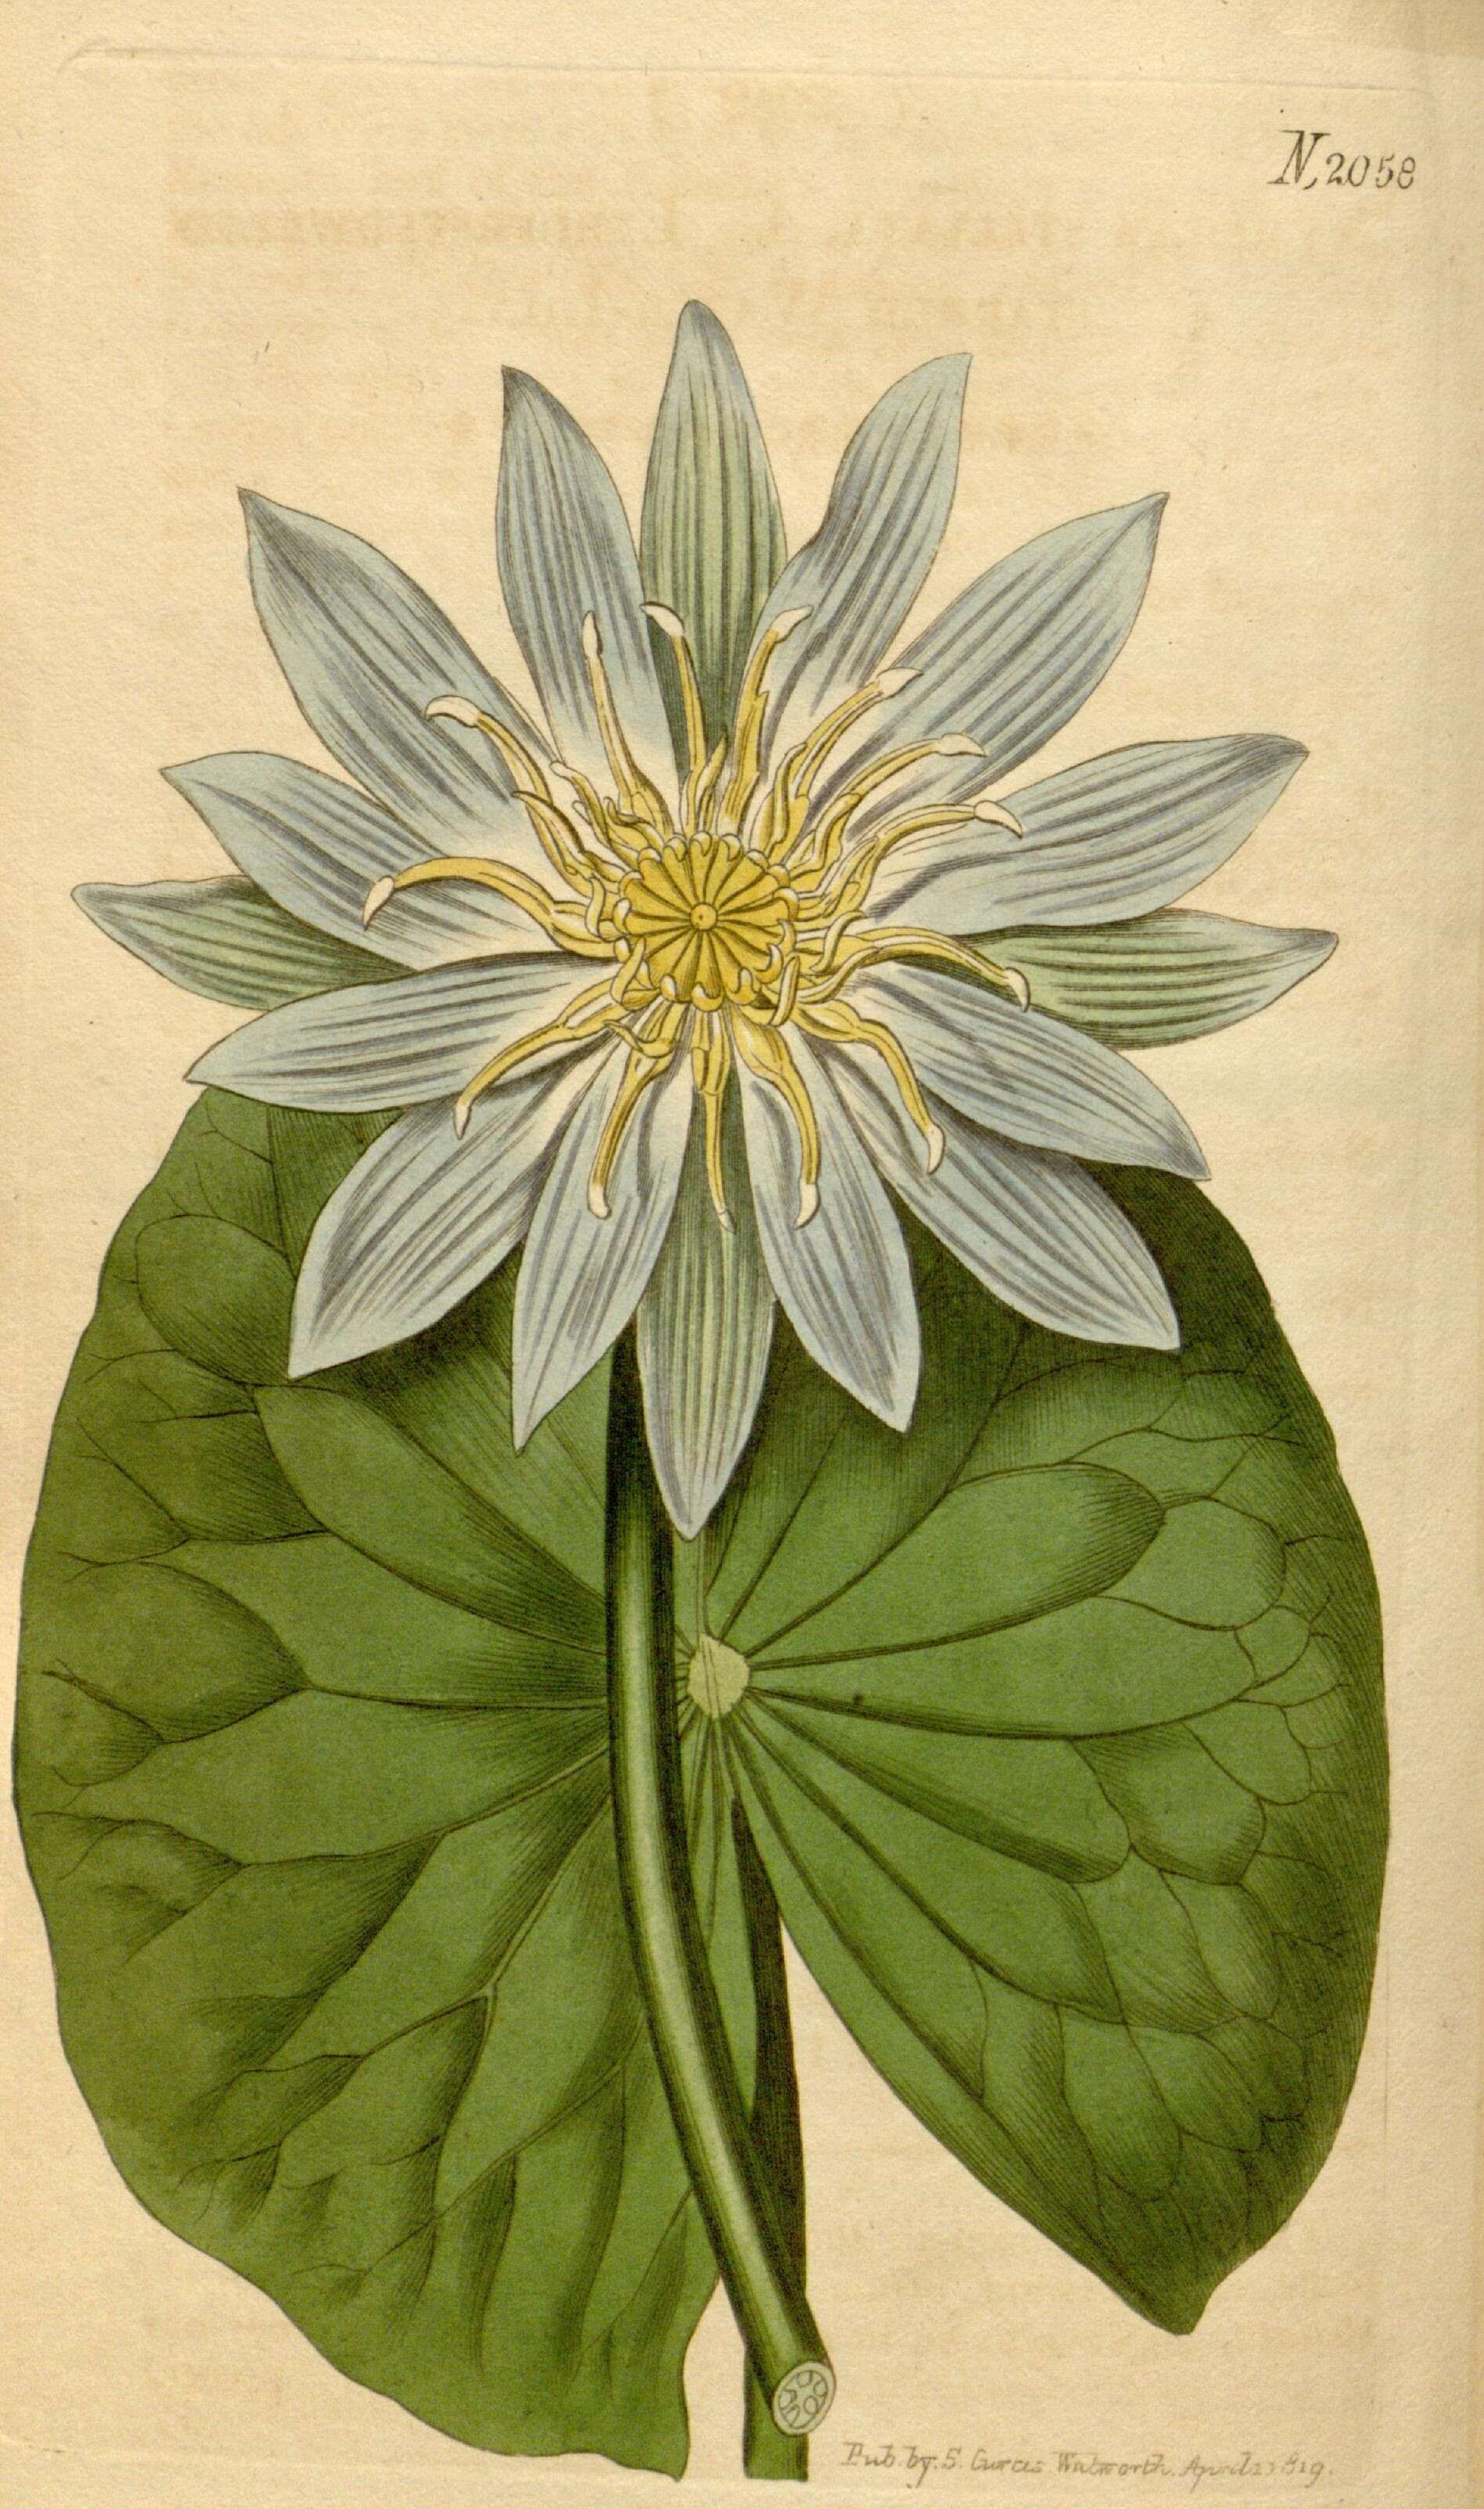 Image of waterlilies